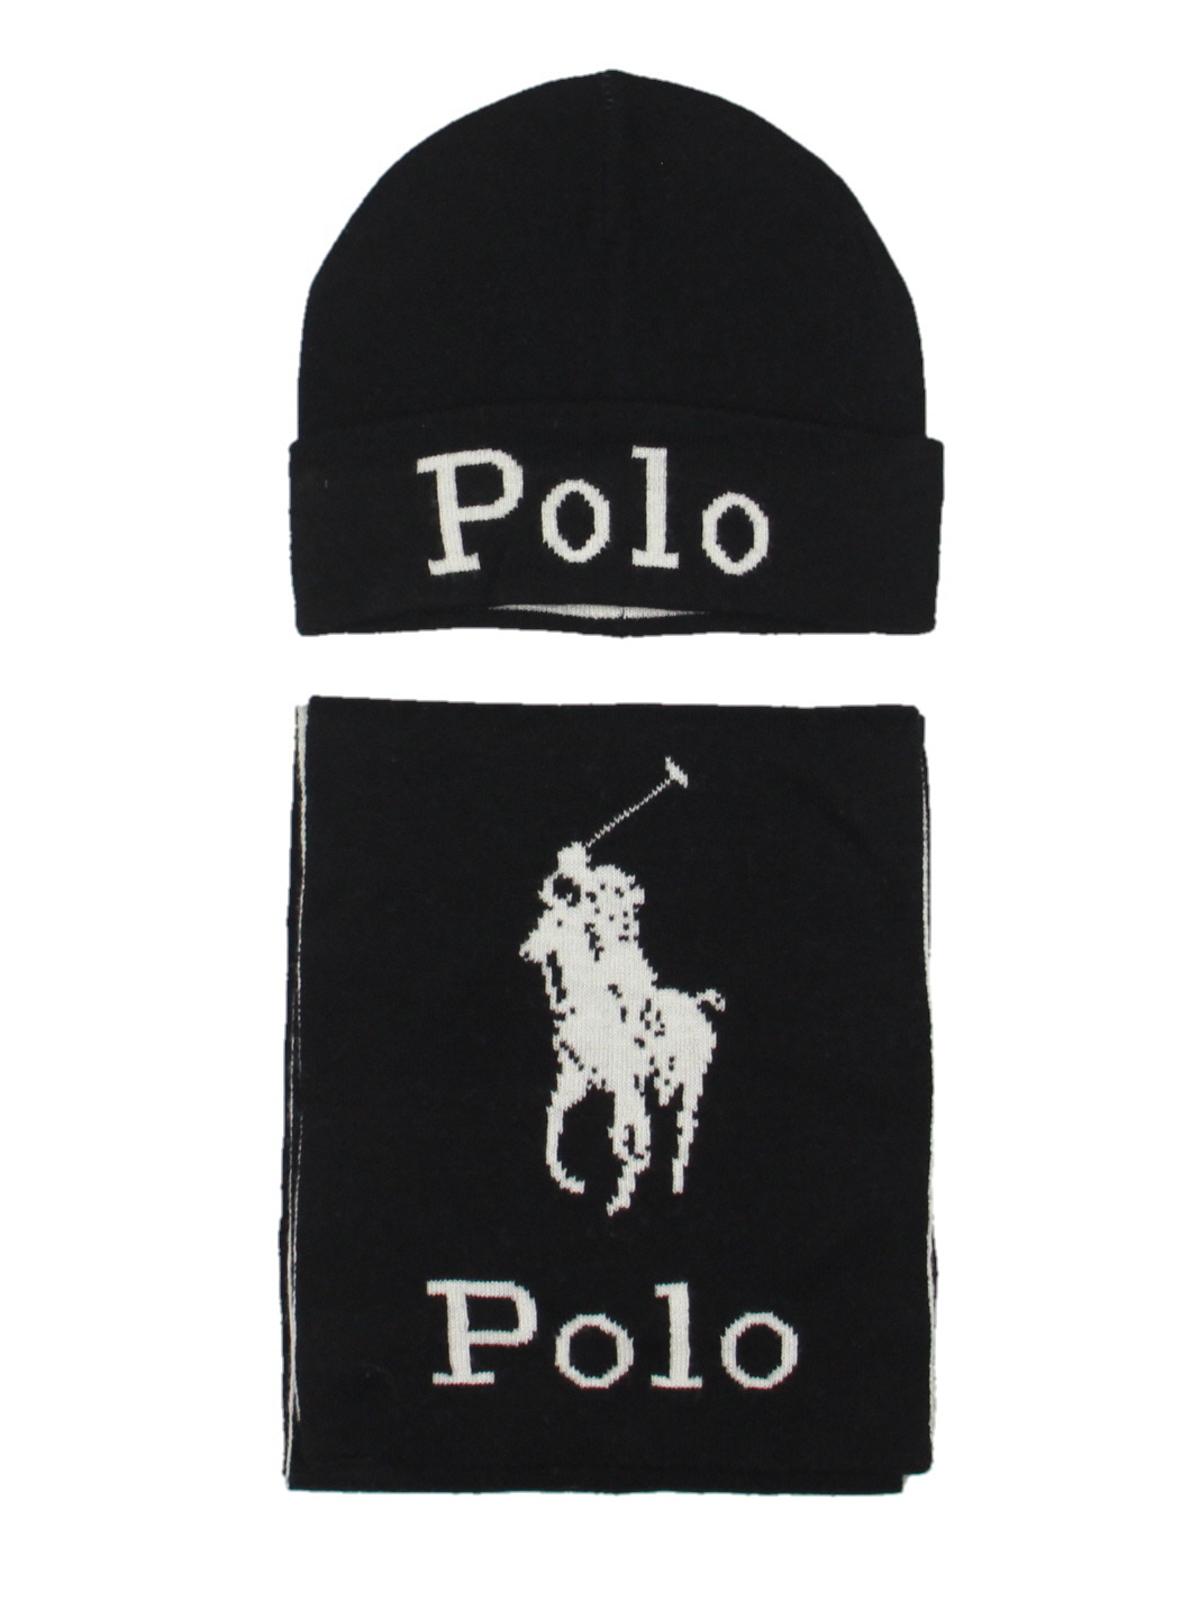 Polo Ralph Lauren Mens Wool Blend Winter Hat & Scarf Set Black O/S - image 1 of 2